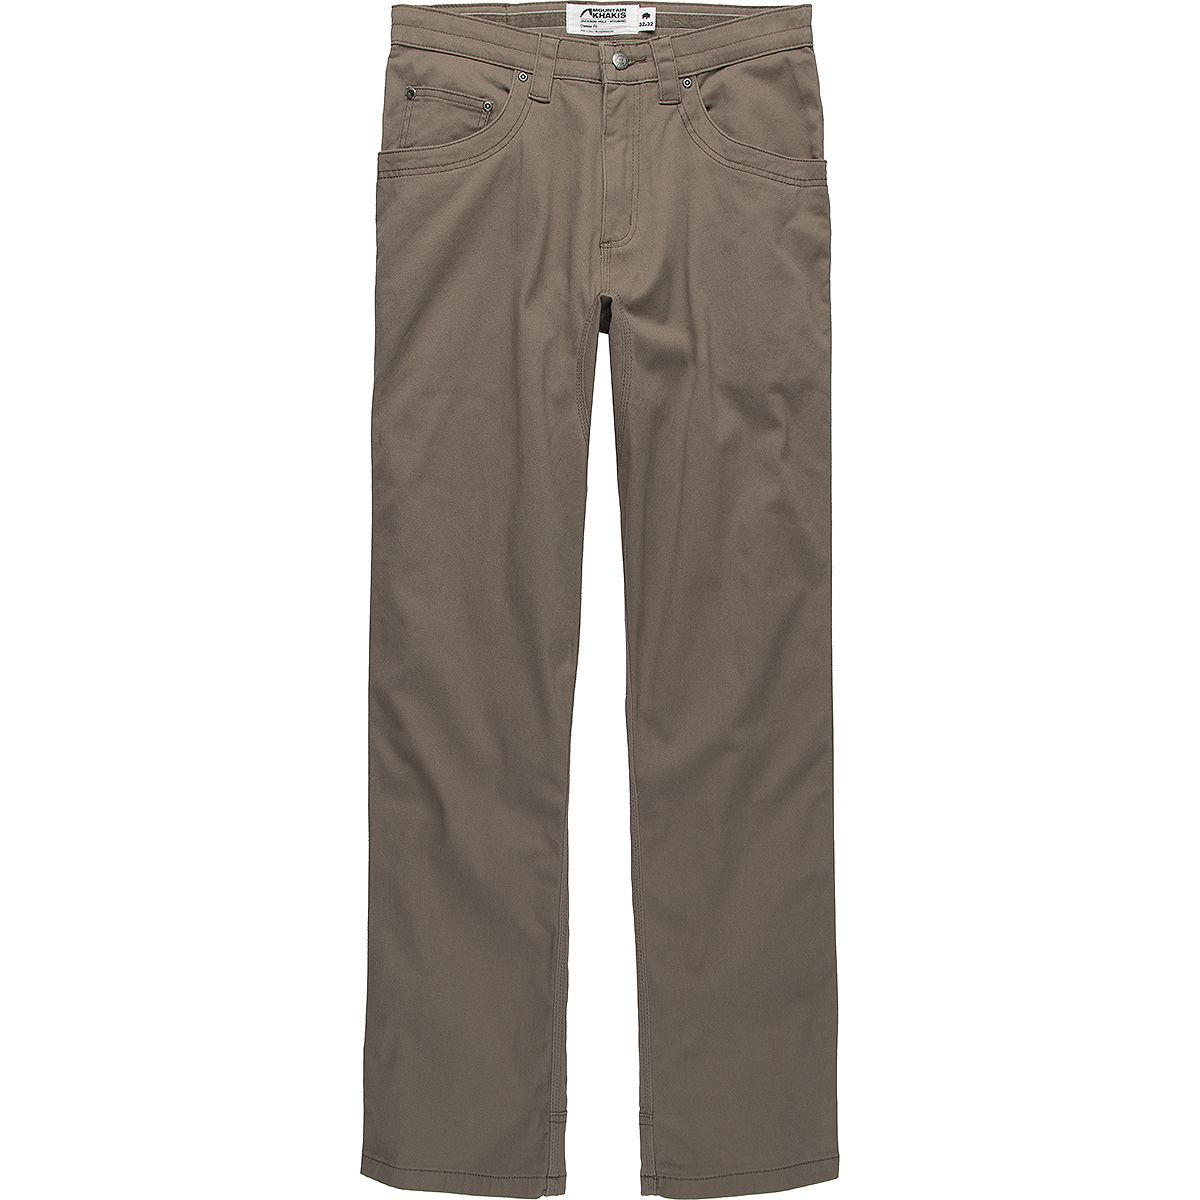 Mountain Khakis Camber 103 Pant - Men's - Clothing